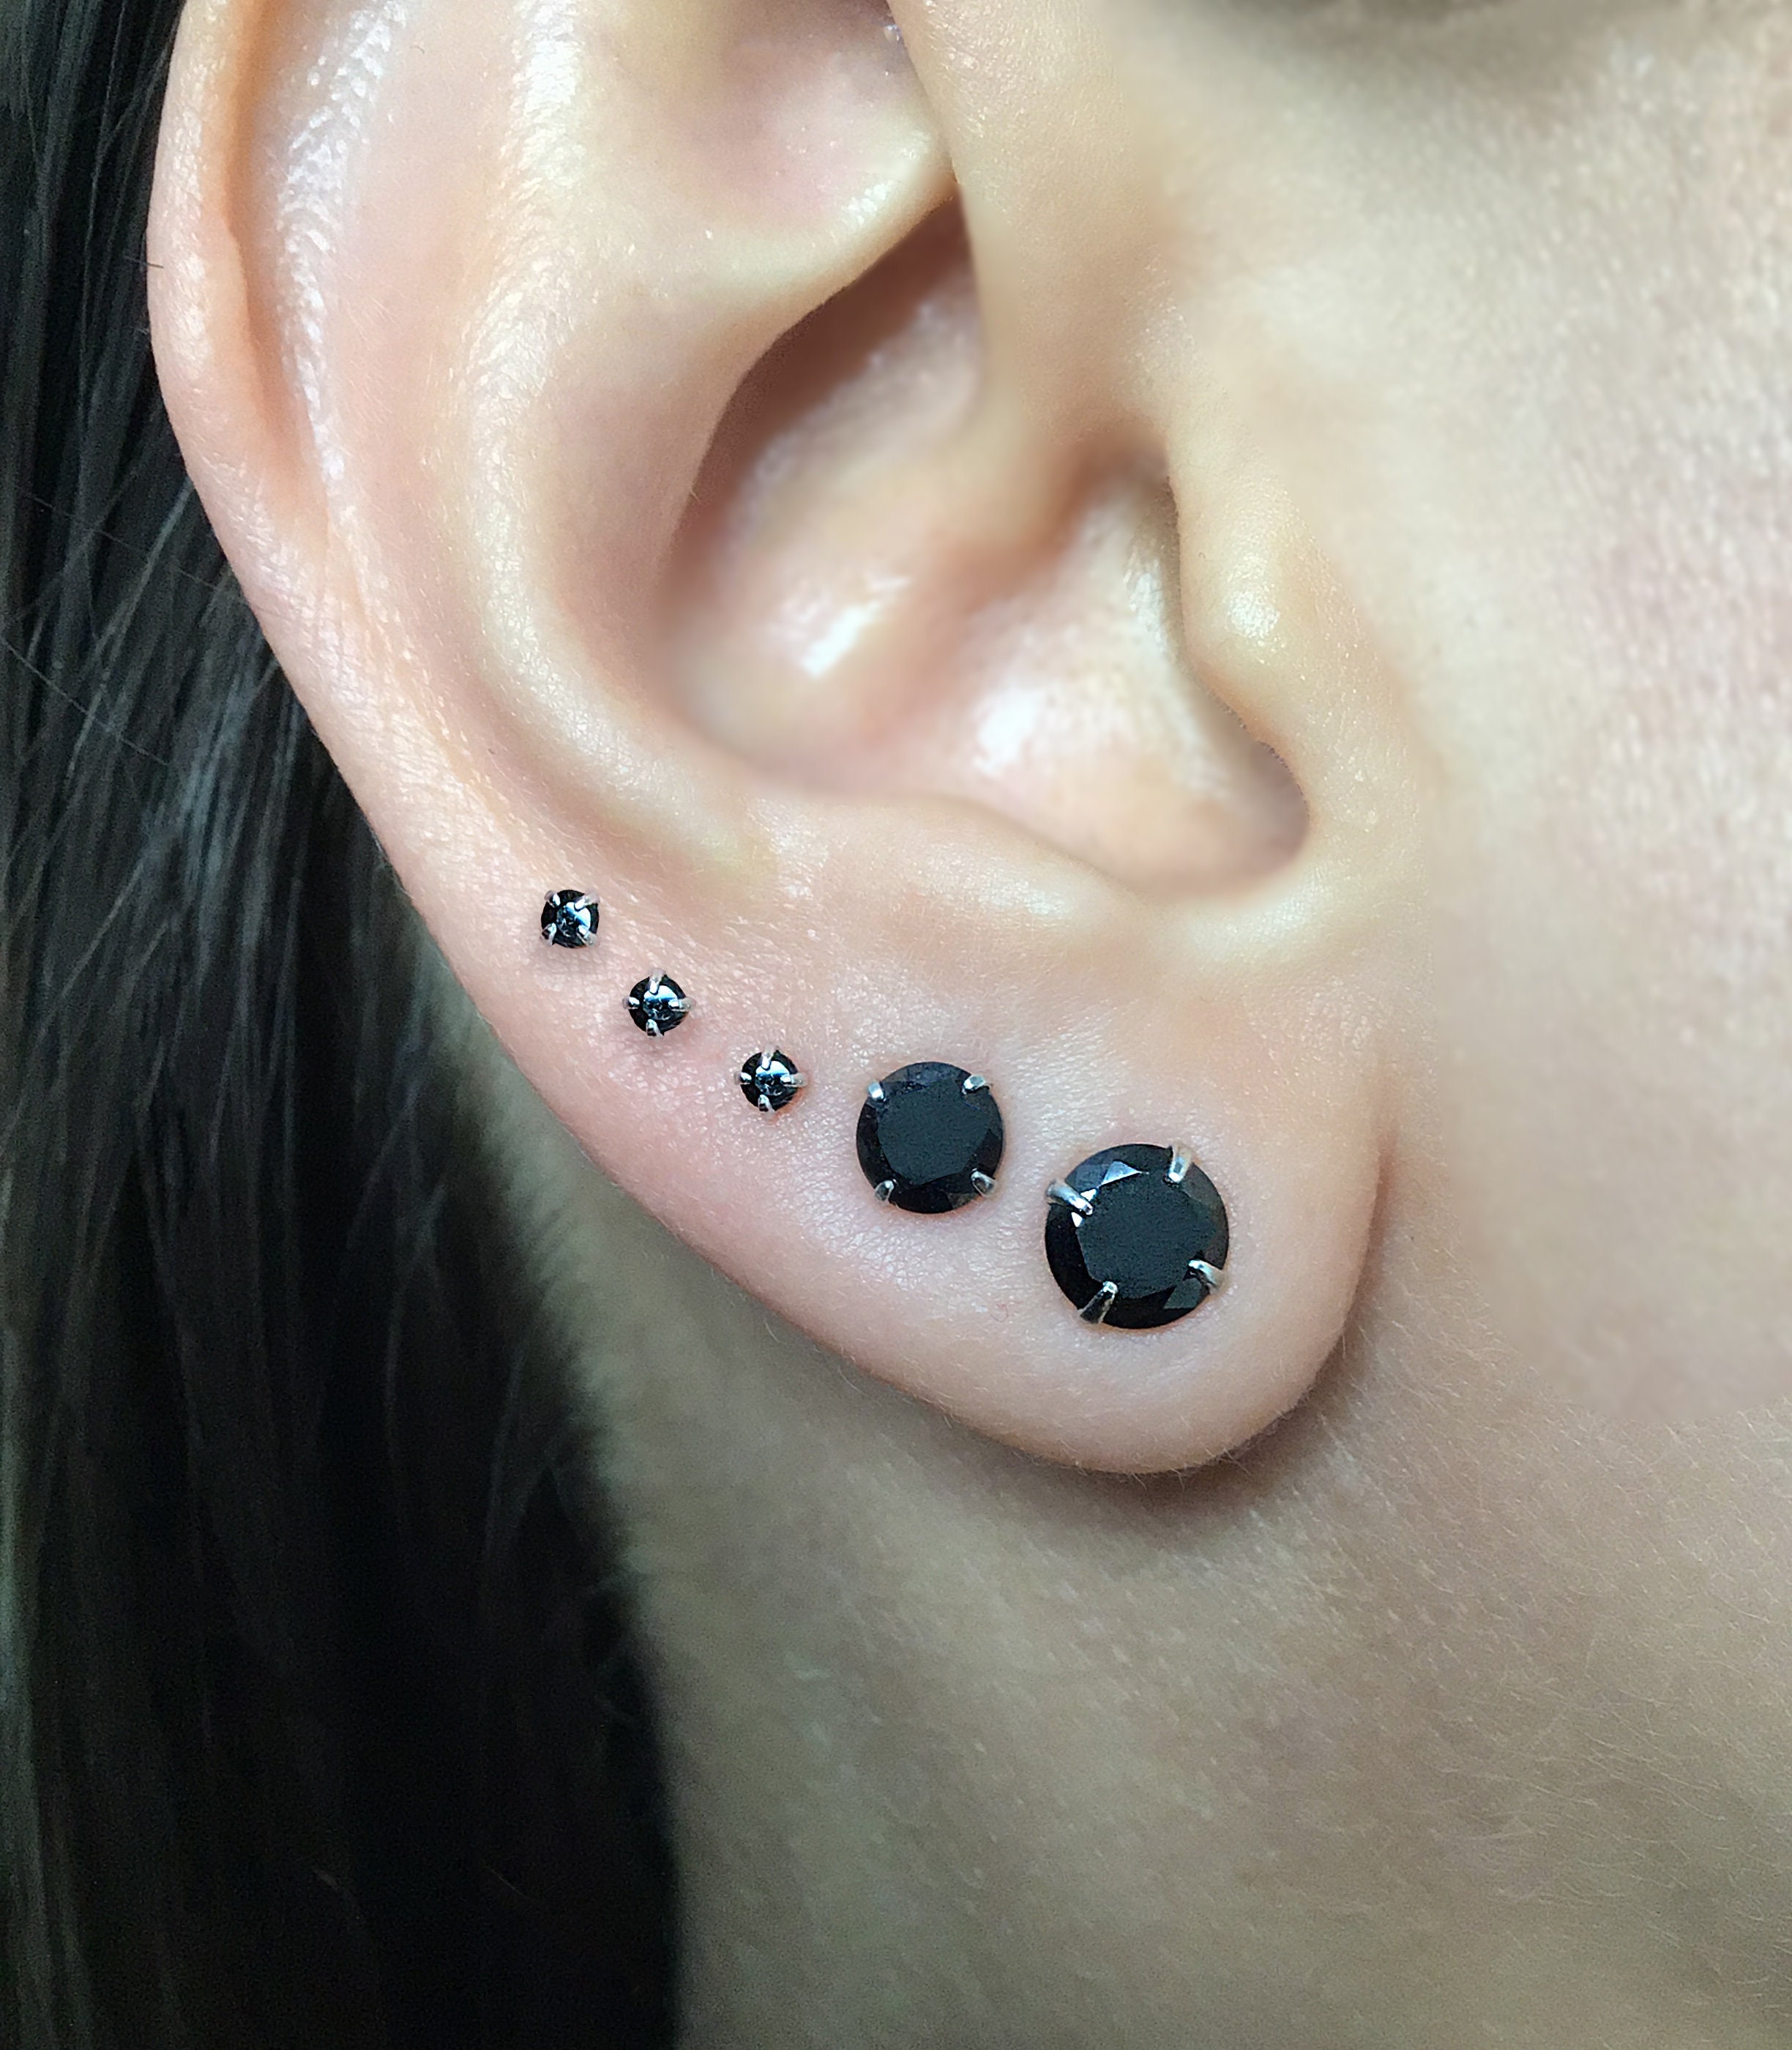 Small Pierced Earring Card- Black